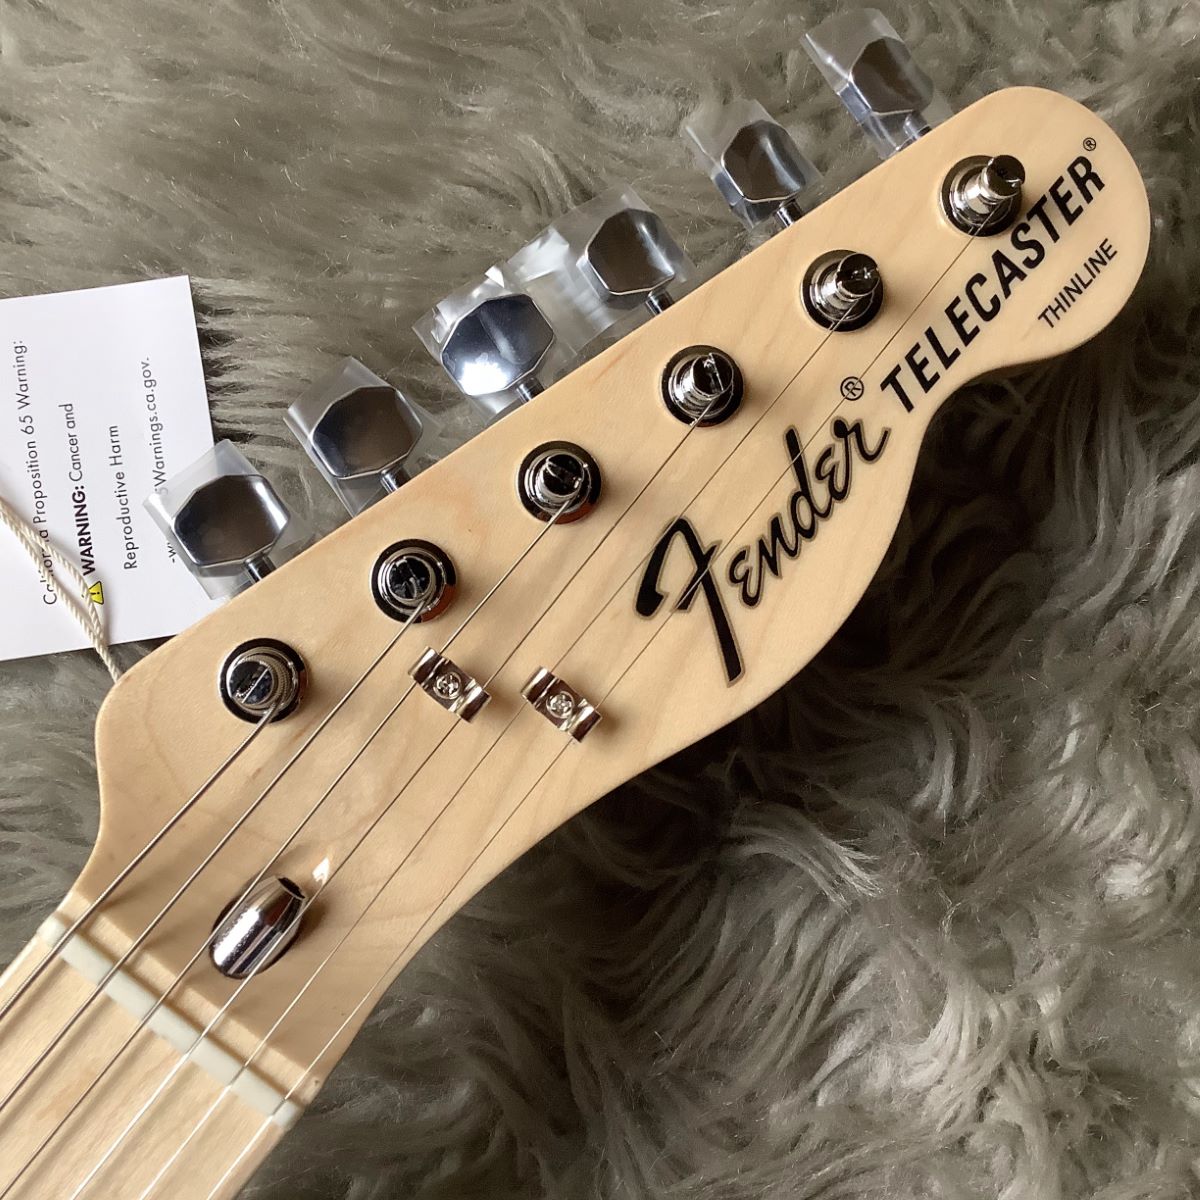 Fender Made in Japan Traditional 70s Telecaster Thinline Maple Fingerboard  テレキャスターシンライン【3.47kg】 フェンダー 【 アリオ橋本店 】 | 島村楽器オンラインストア